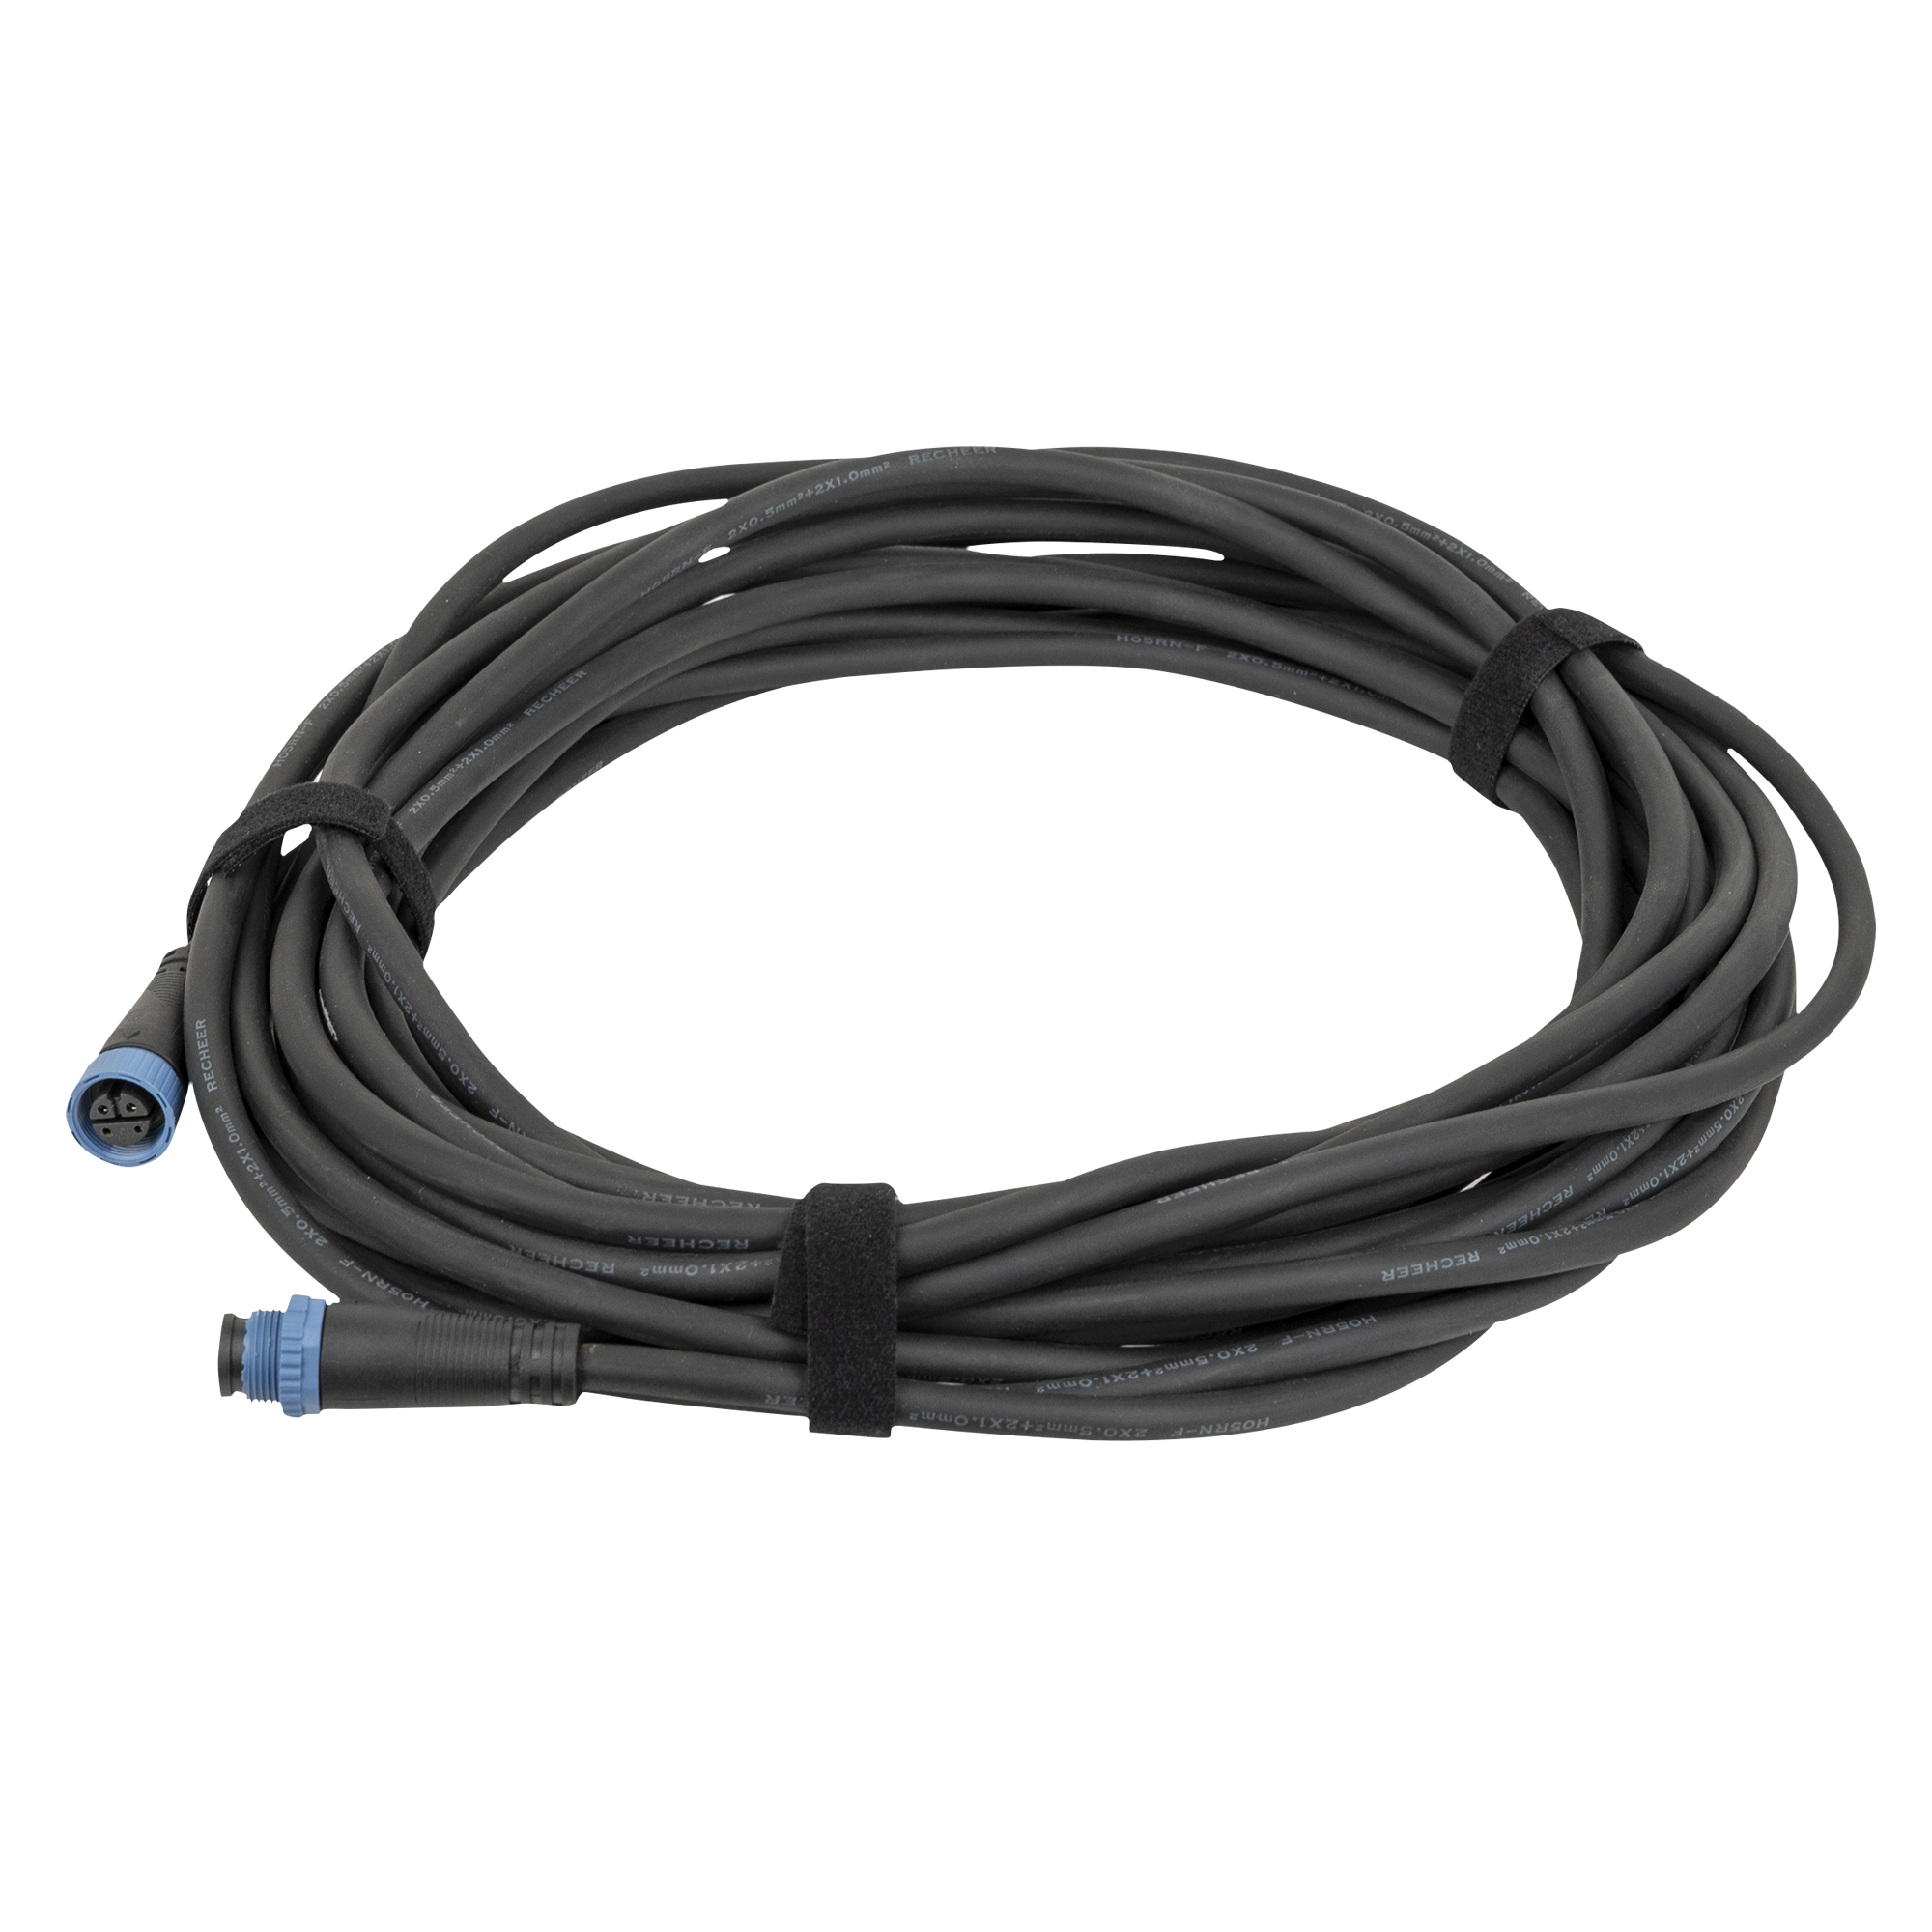 Extension Cable for Festoonlight Q4 - Onlinediscowinkel.nl